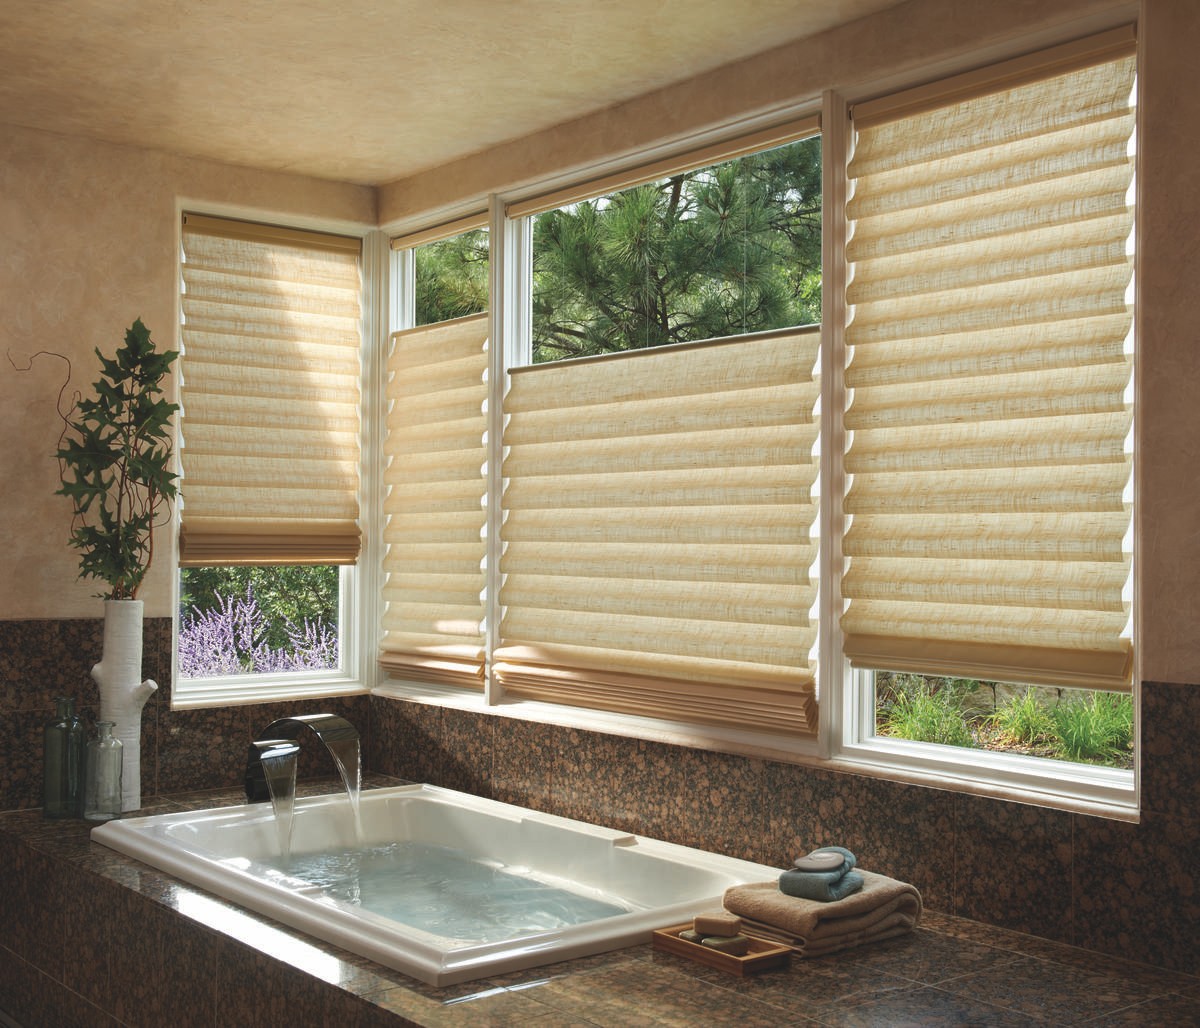 Bathroom Window Treatments for Homes near Sarasota, Florida (FL) including Vignette Modern Roman Shades